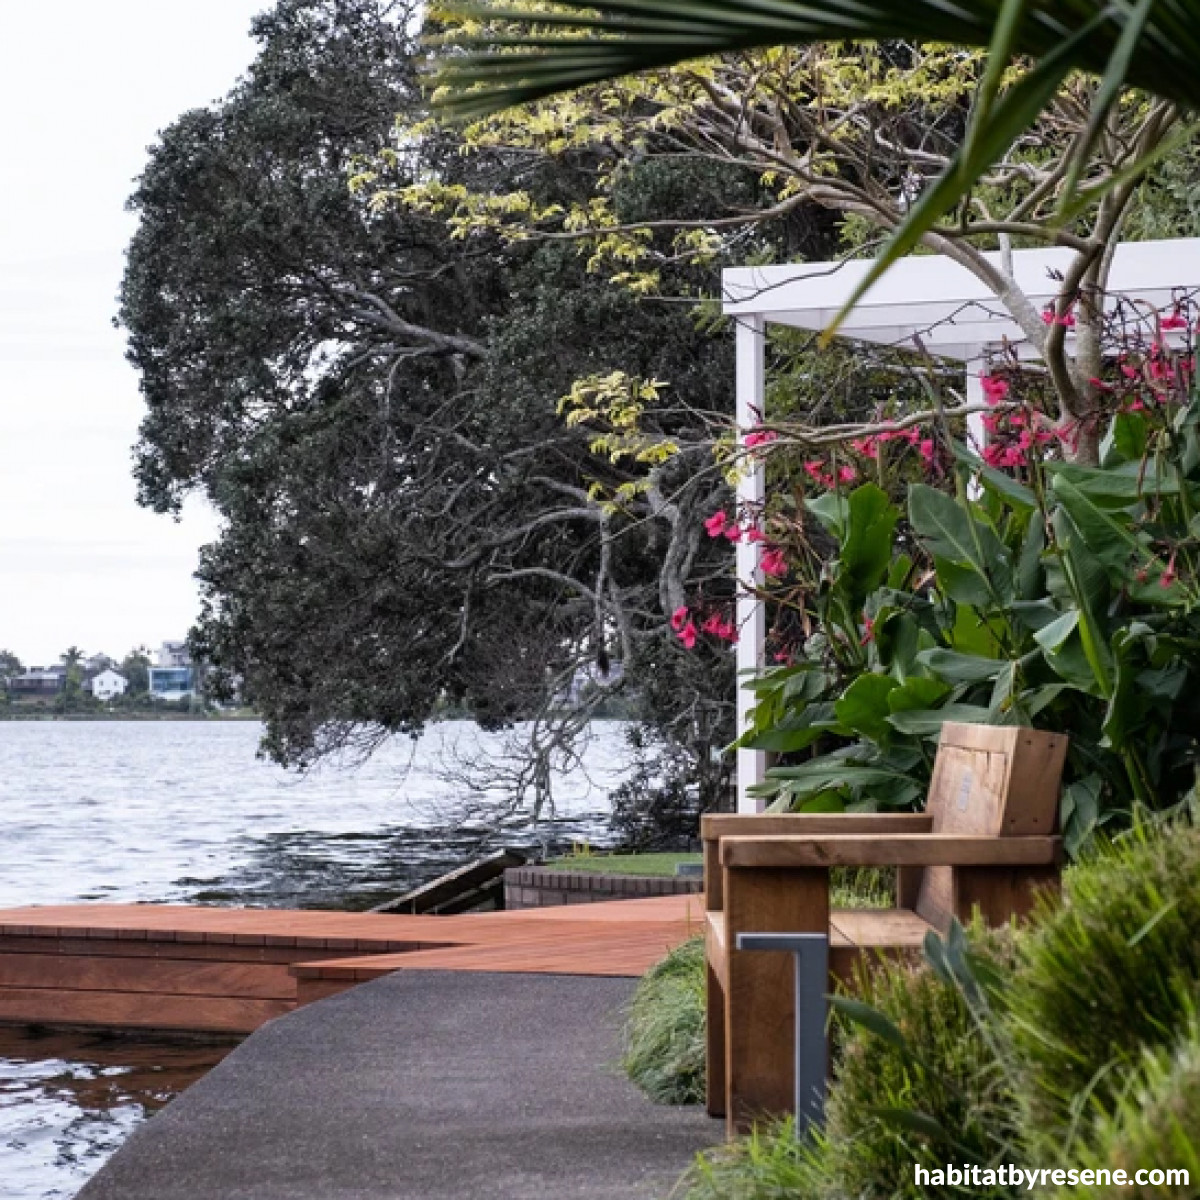 Explore Some Of Aucklands Best Gardens At The Auckland Garden